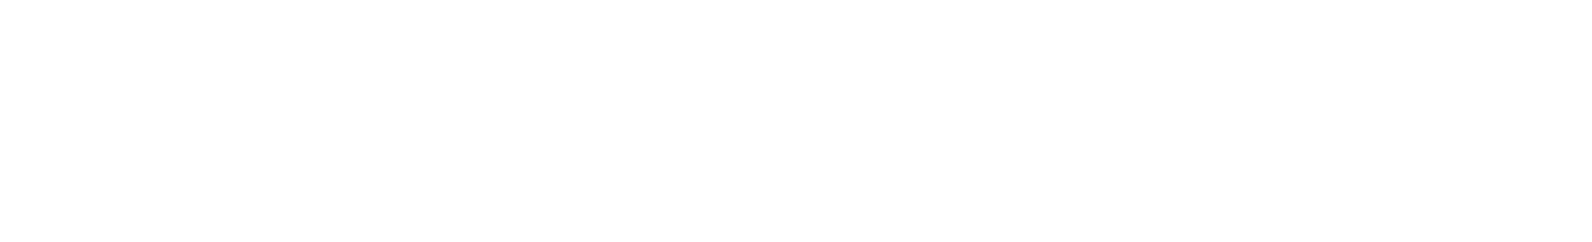 white elongated INFO logo